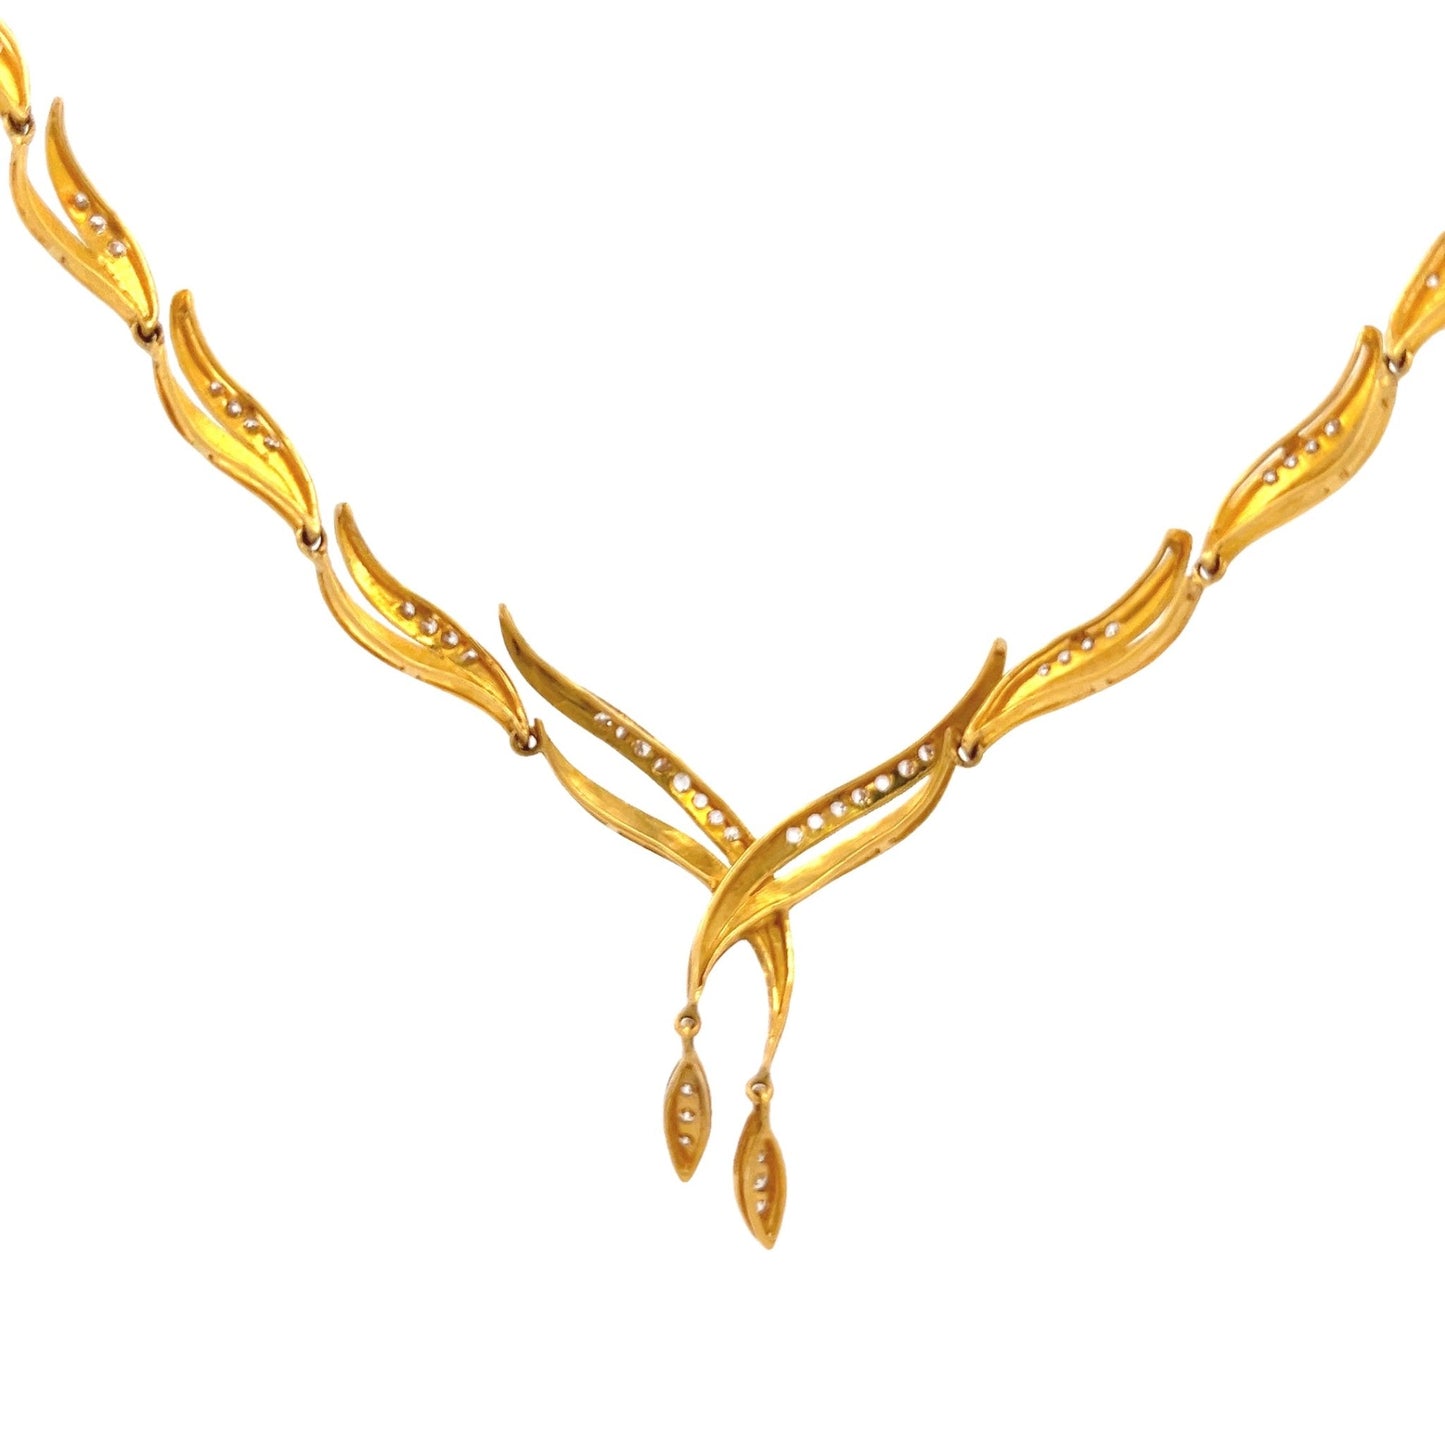 22ct yellow gold elegant necklace 07001332NecklaceRetroGold